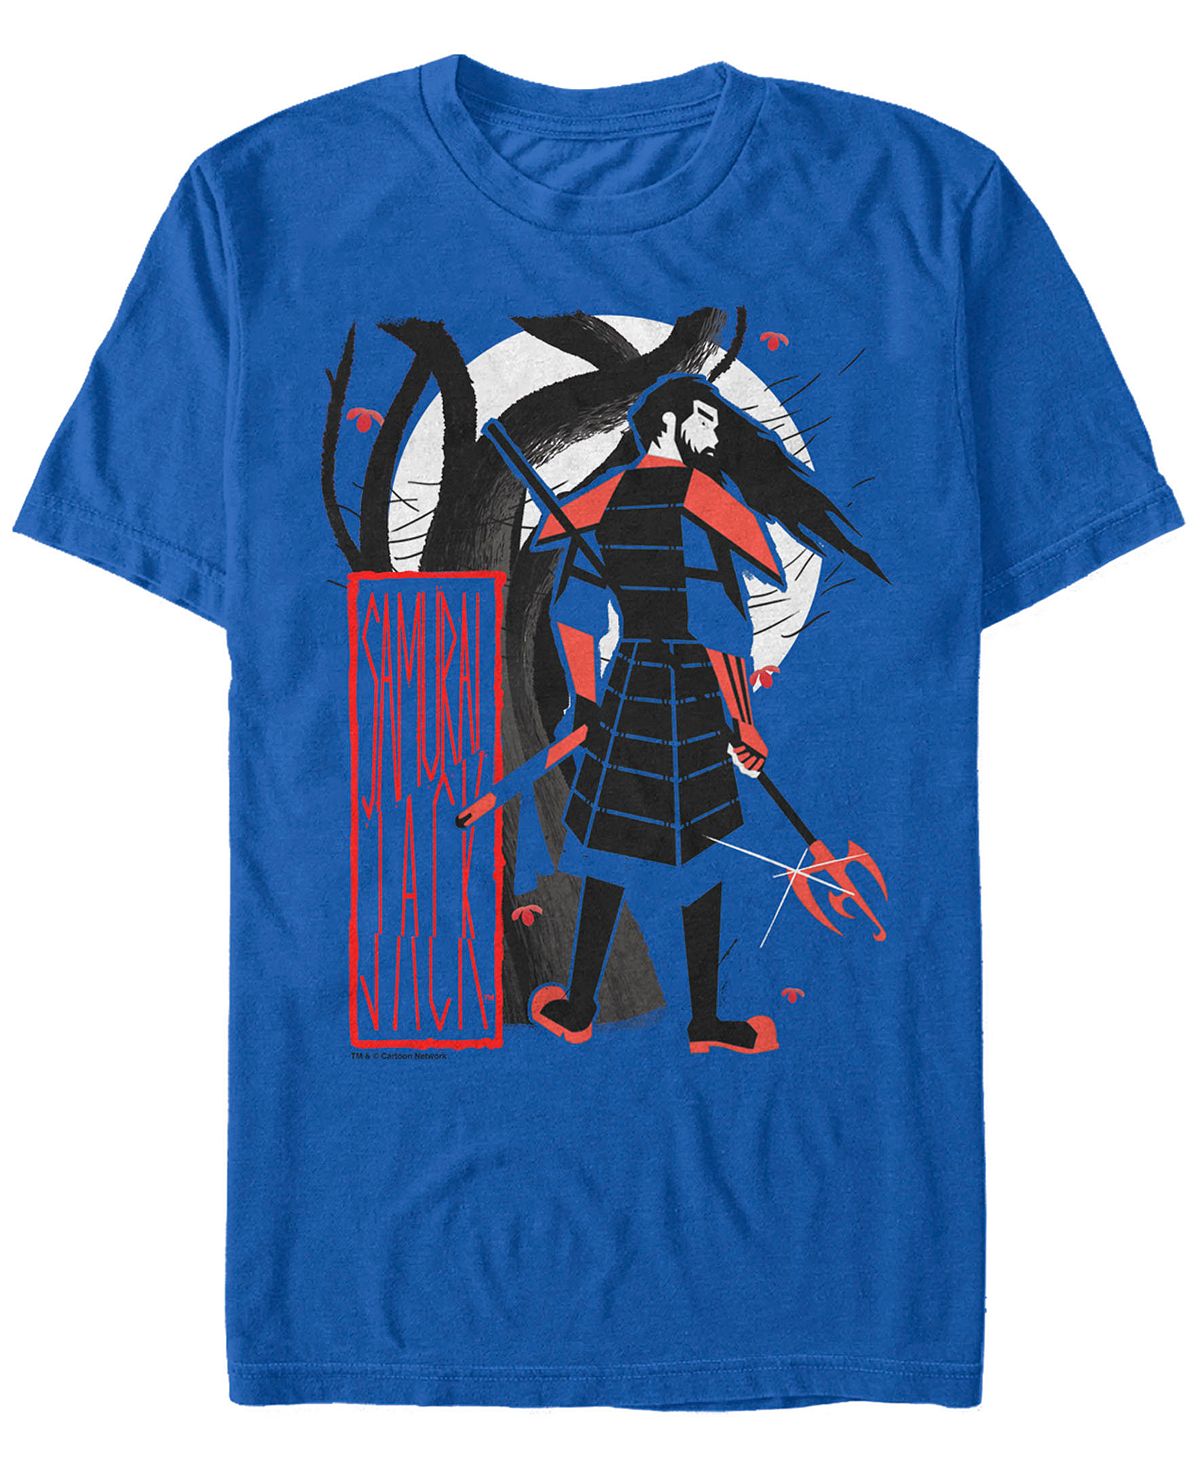 Мужская футболка samurai jack old jack moon с коротким рукавом Fifth Sun bratz школа крутых девчонок 2